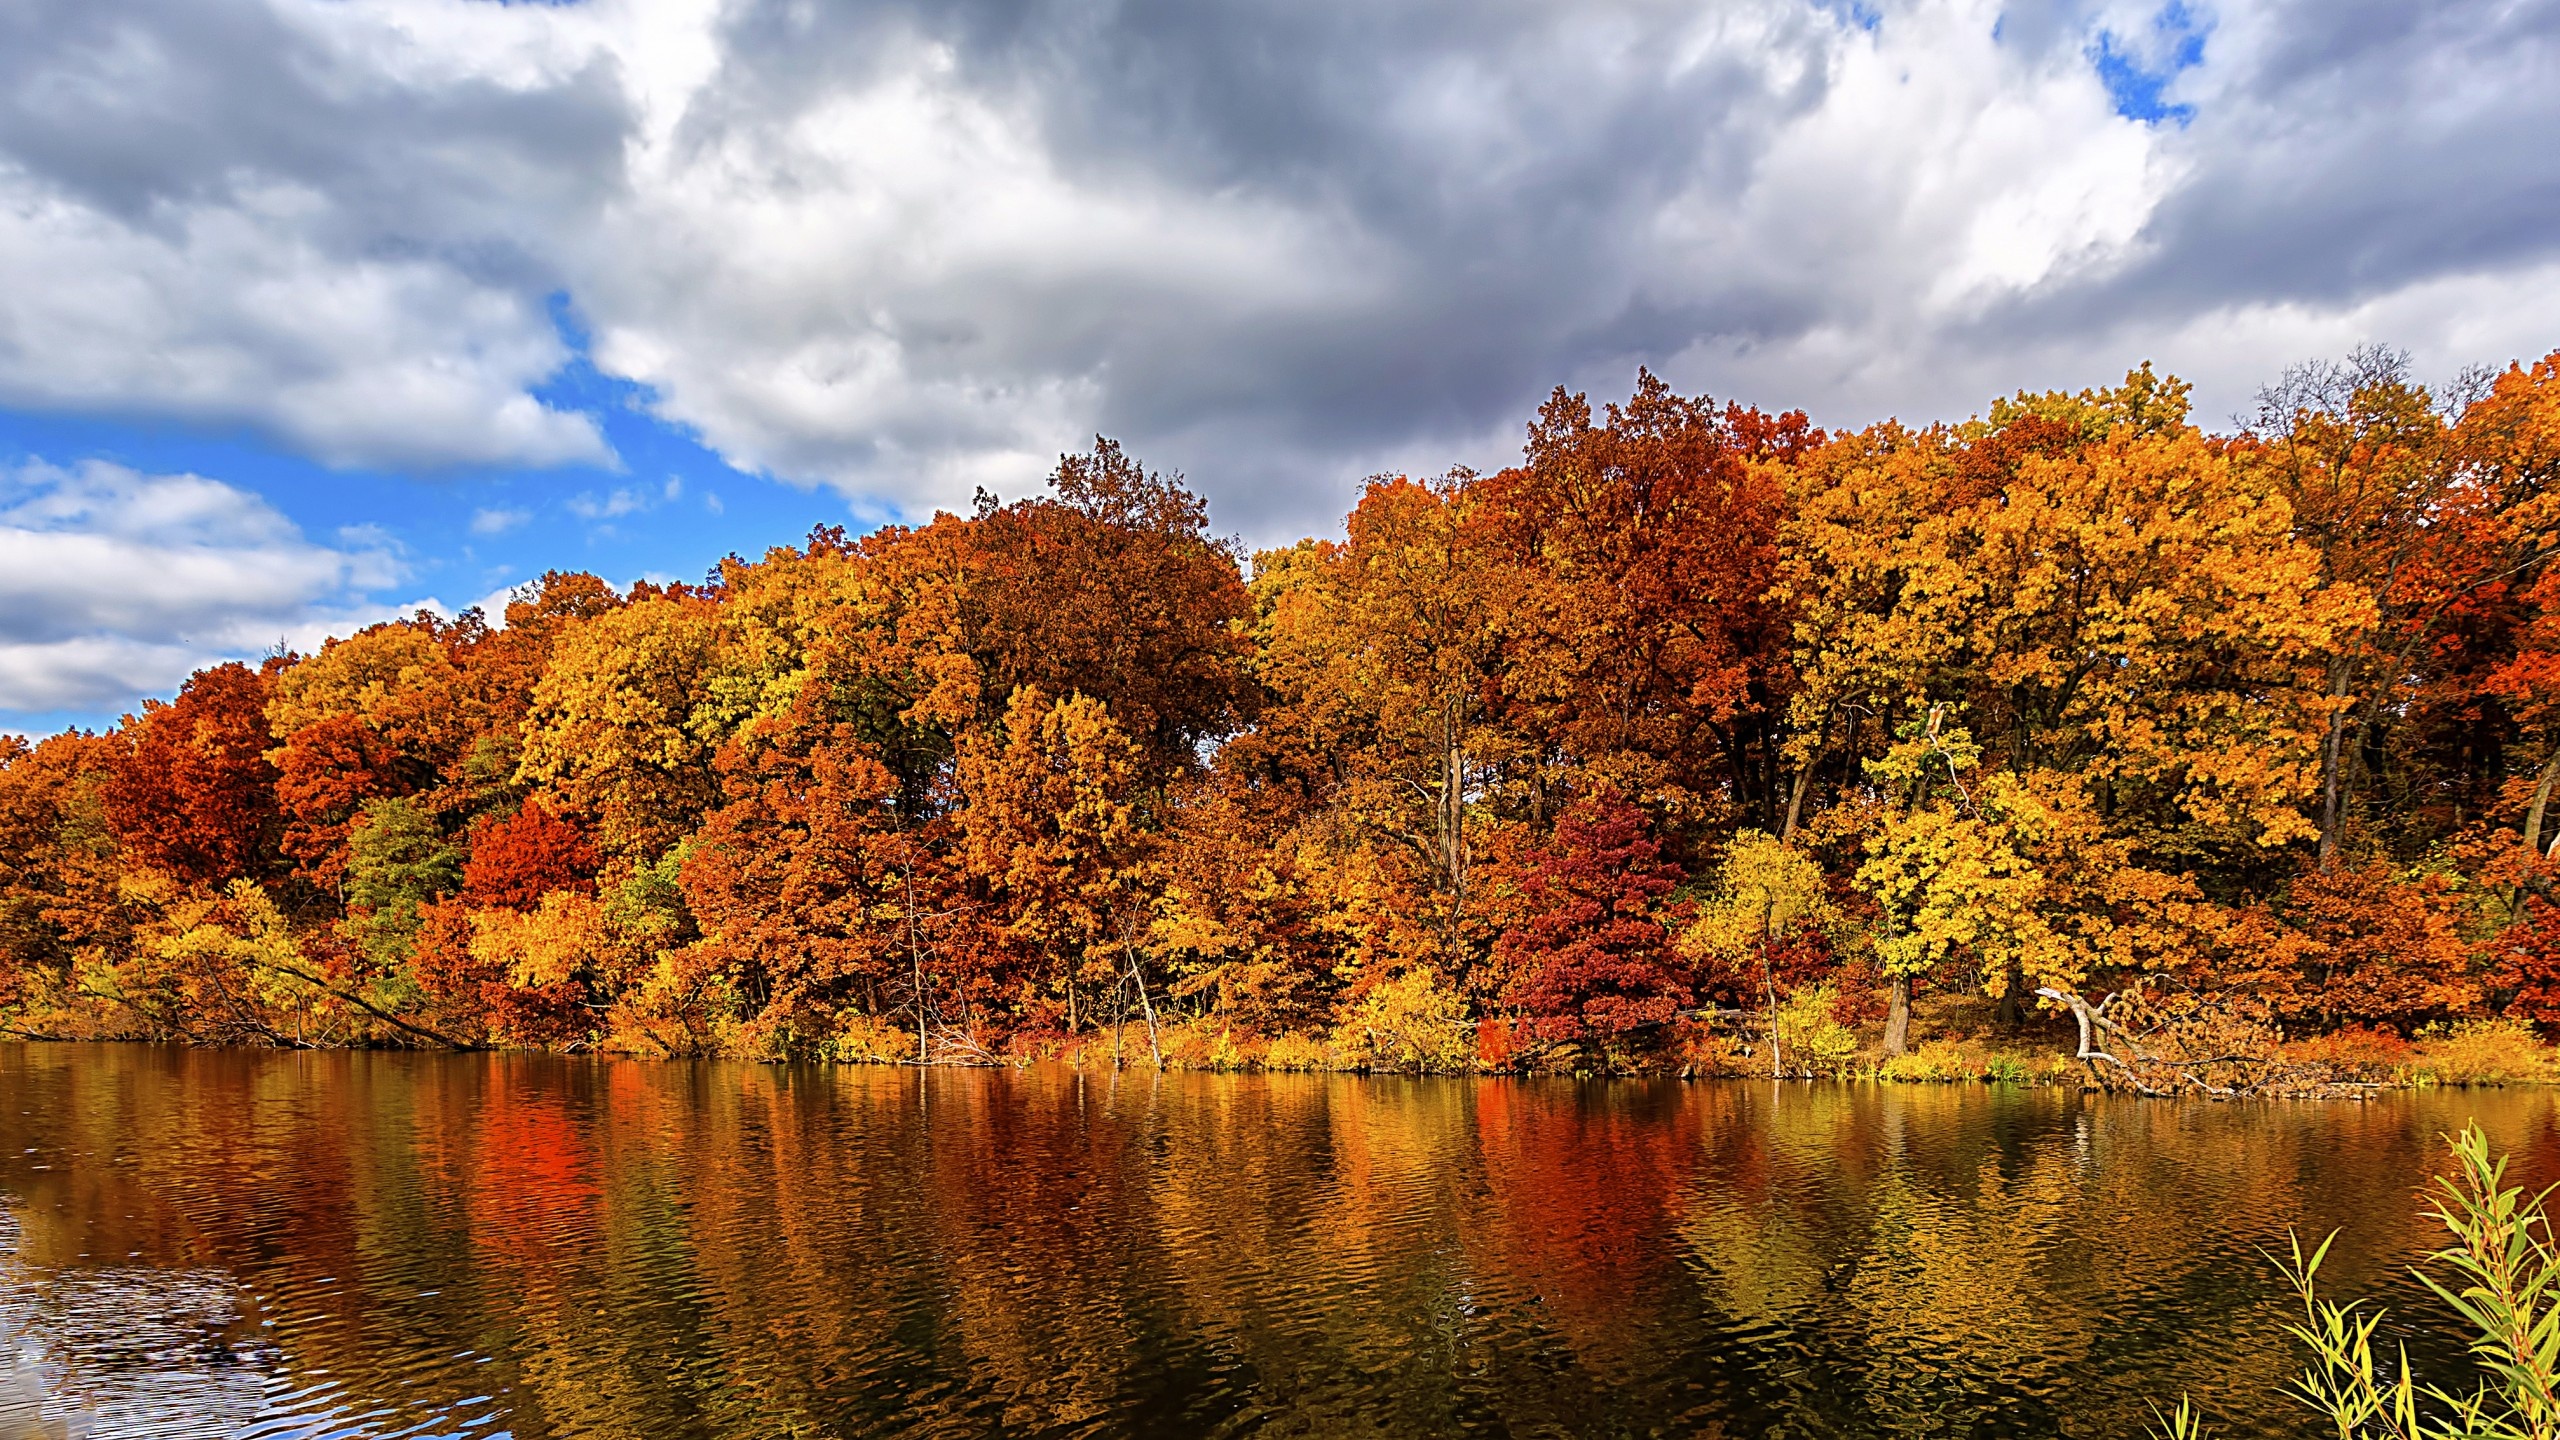 Autumn forest lake, Nature wallpaper, Landscape photography, Fall scenery, 2560x1440 HD Desktop